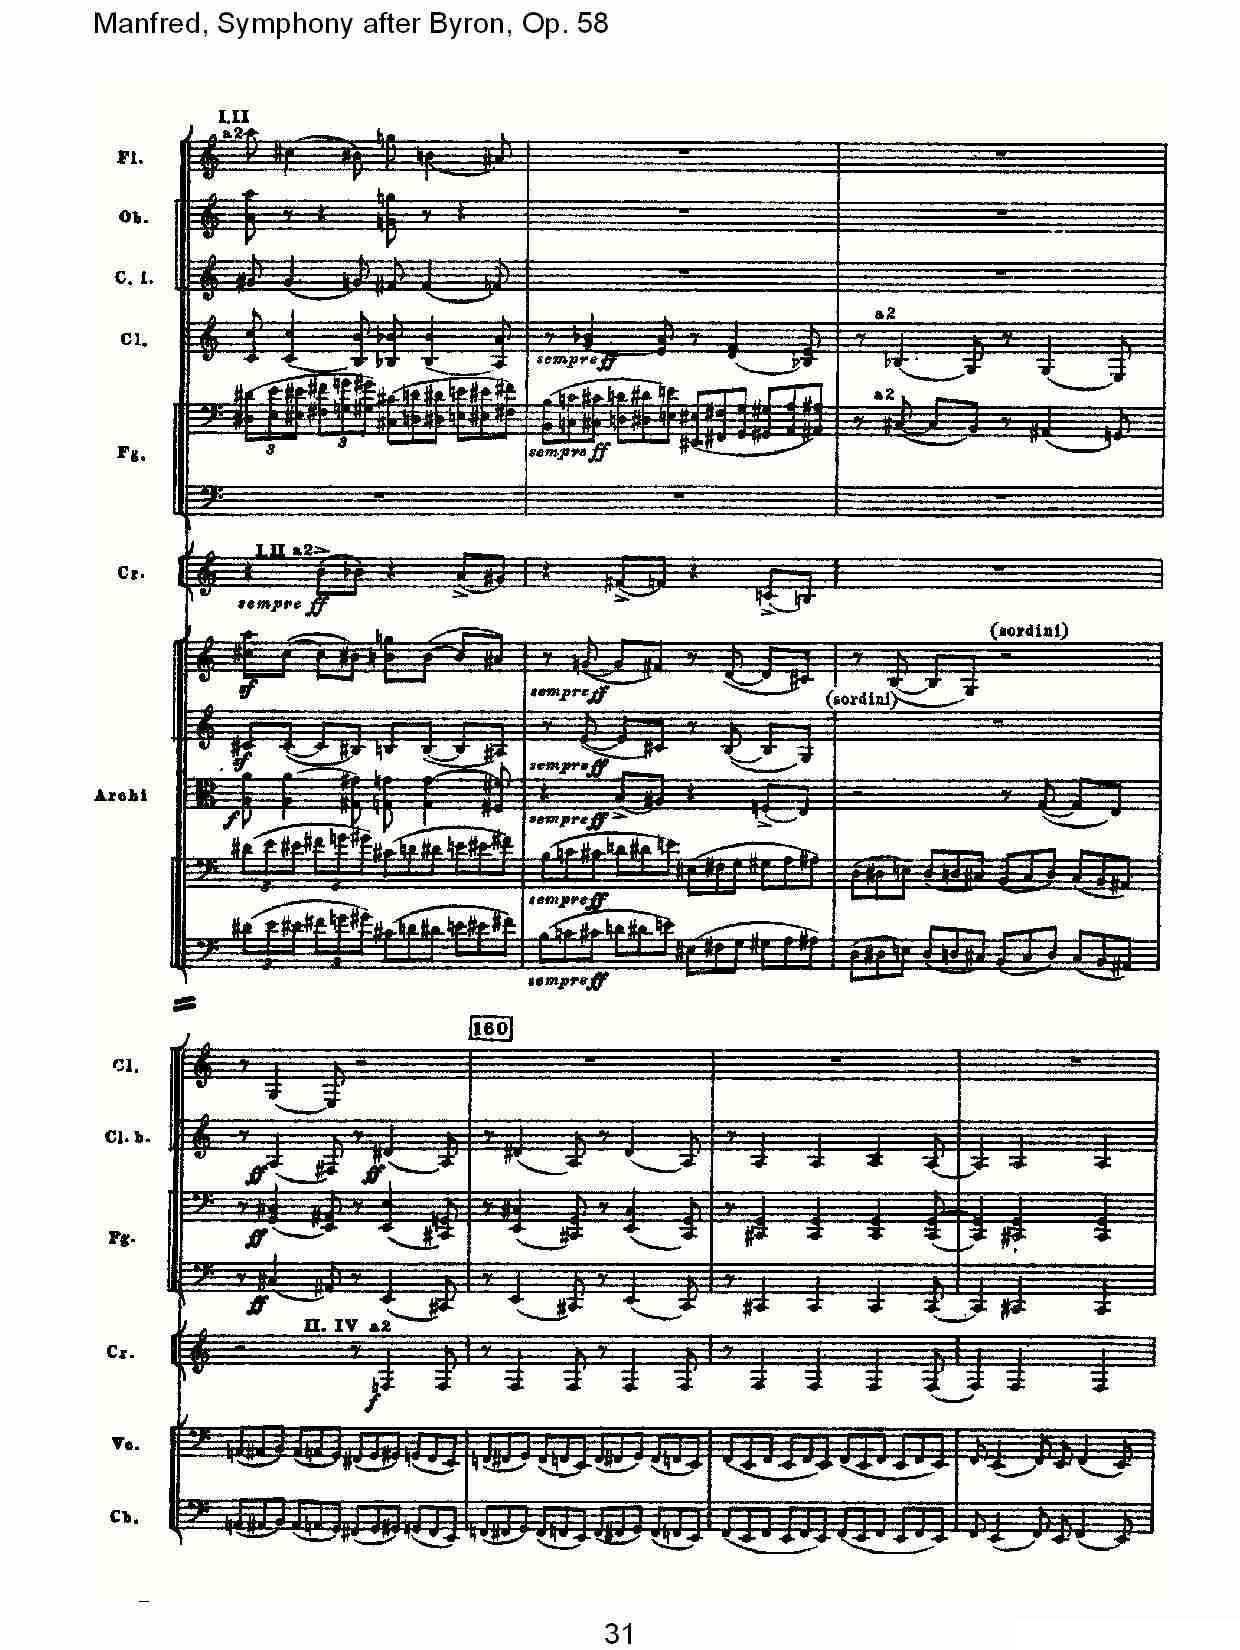 Manfred, Symphony after Byron, Op.58第一乐章（一）其它曲谱（图31）